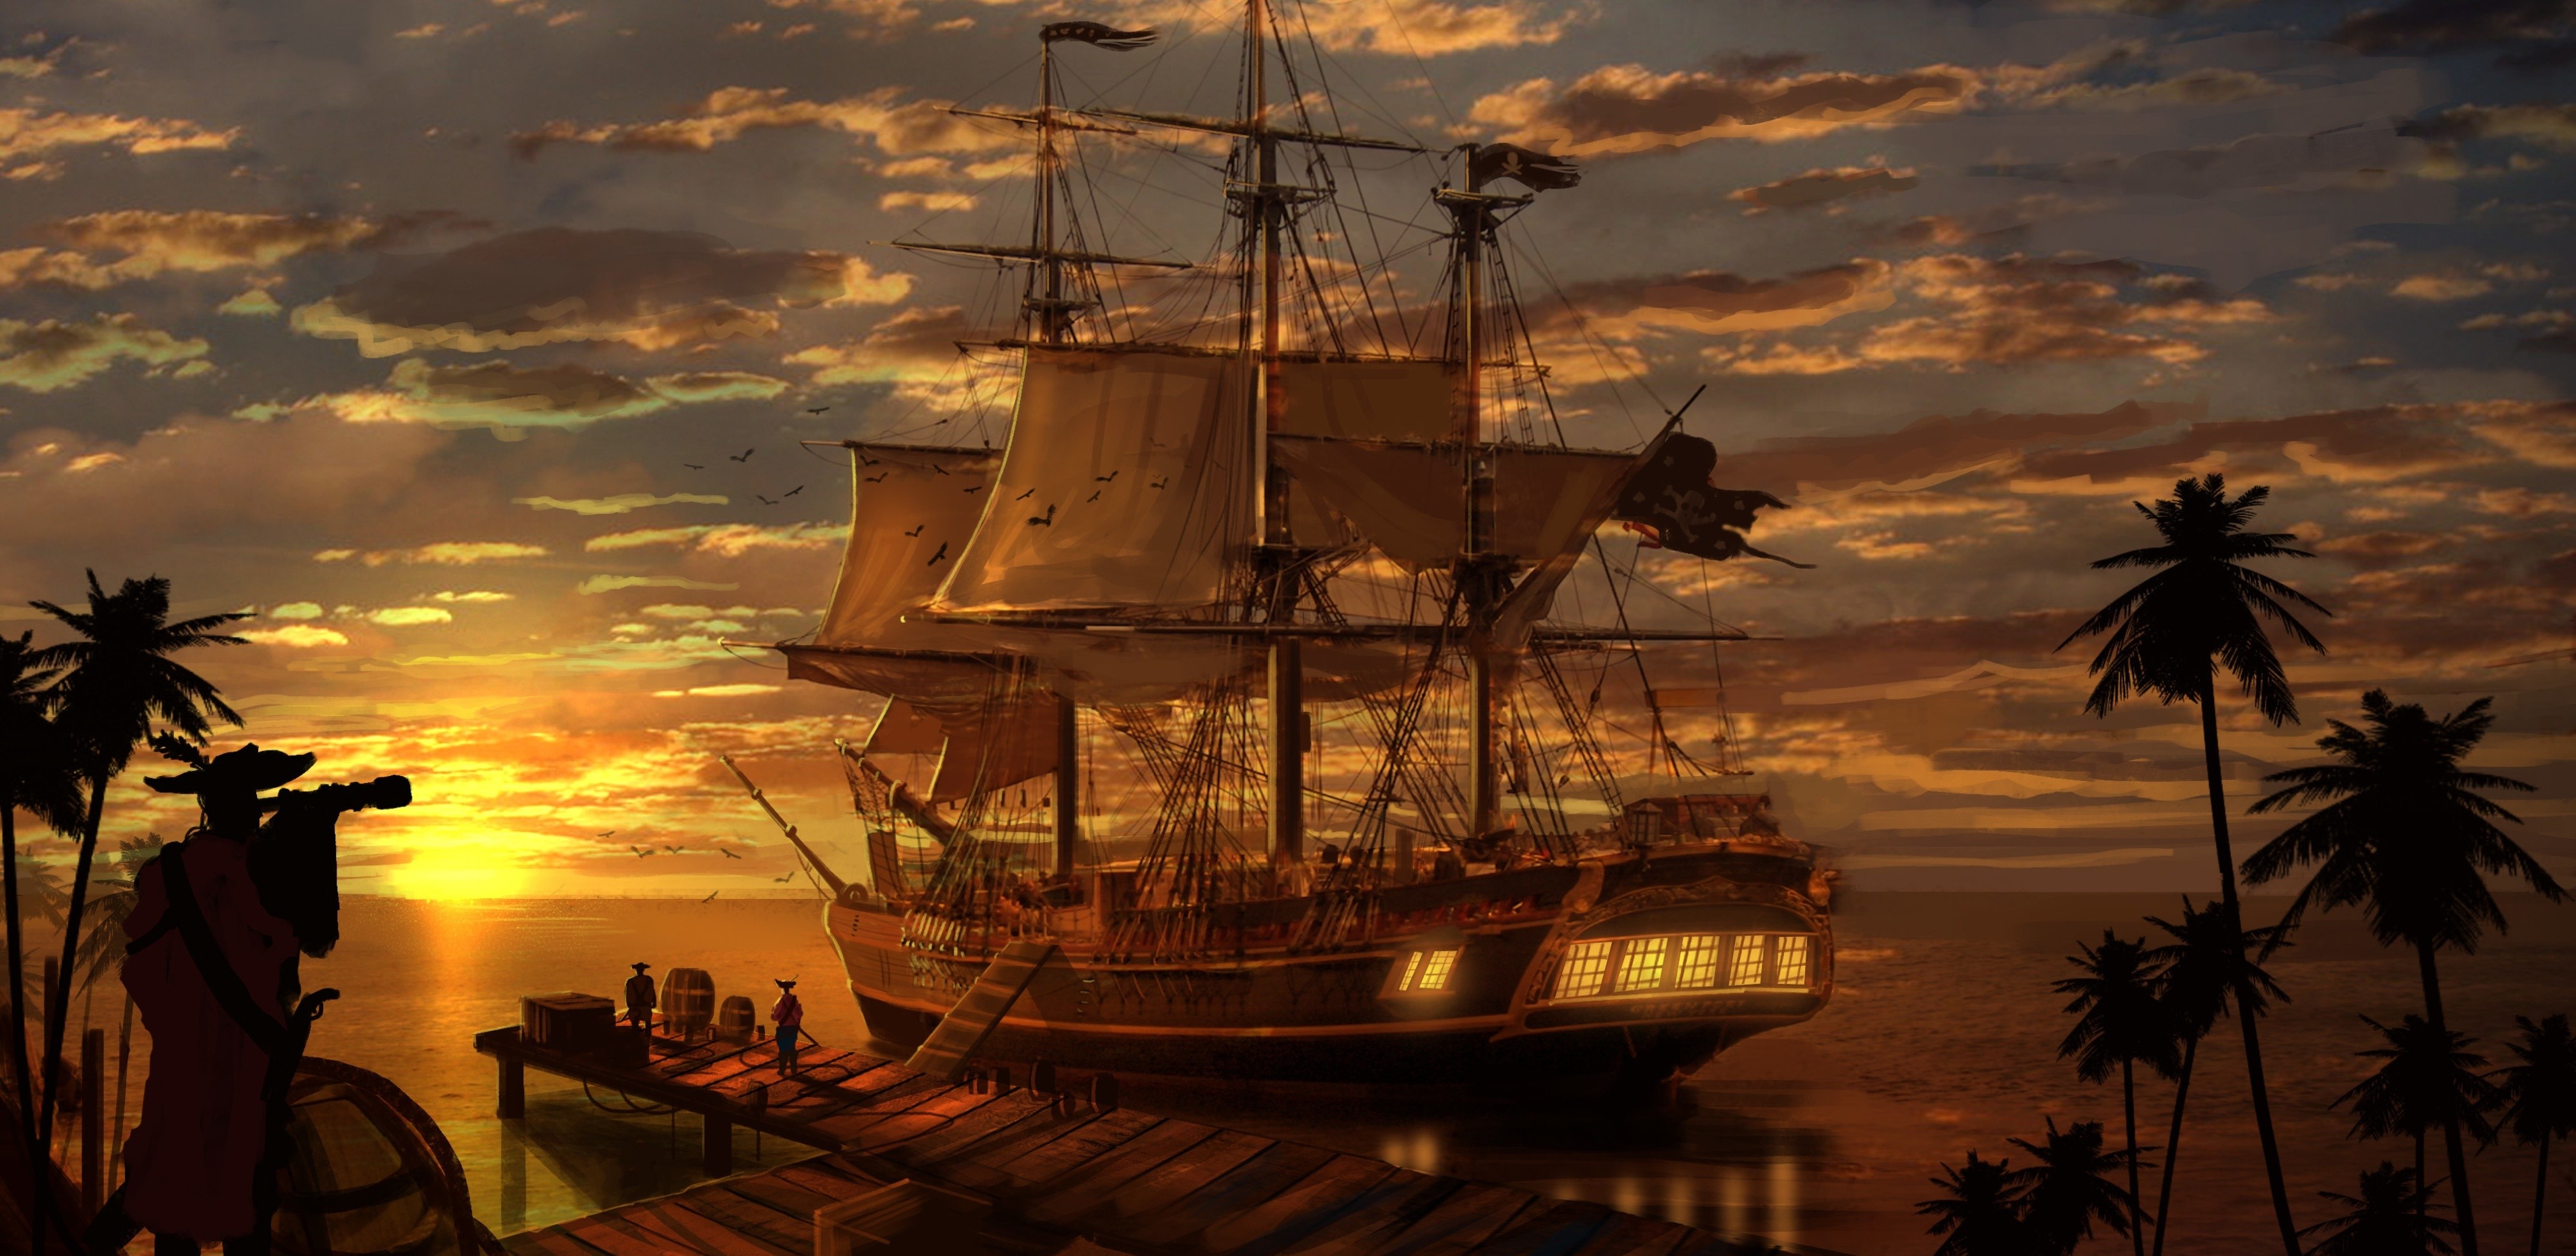 General 4040x1970 sailing ship pirates sky rigging (ship) vehicle fantasy art sunlight clouds